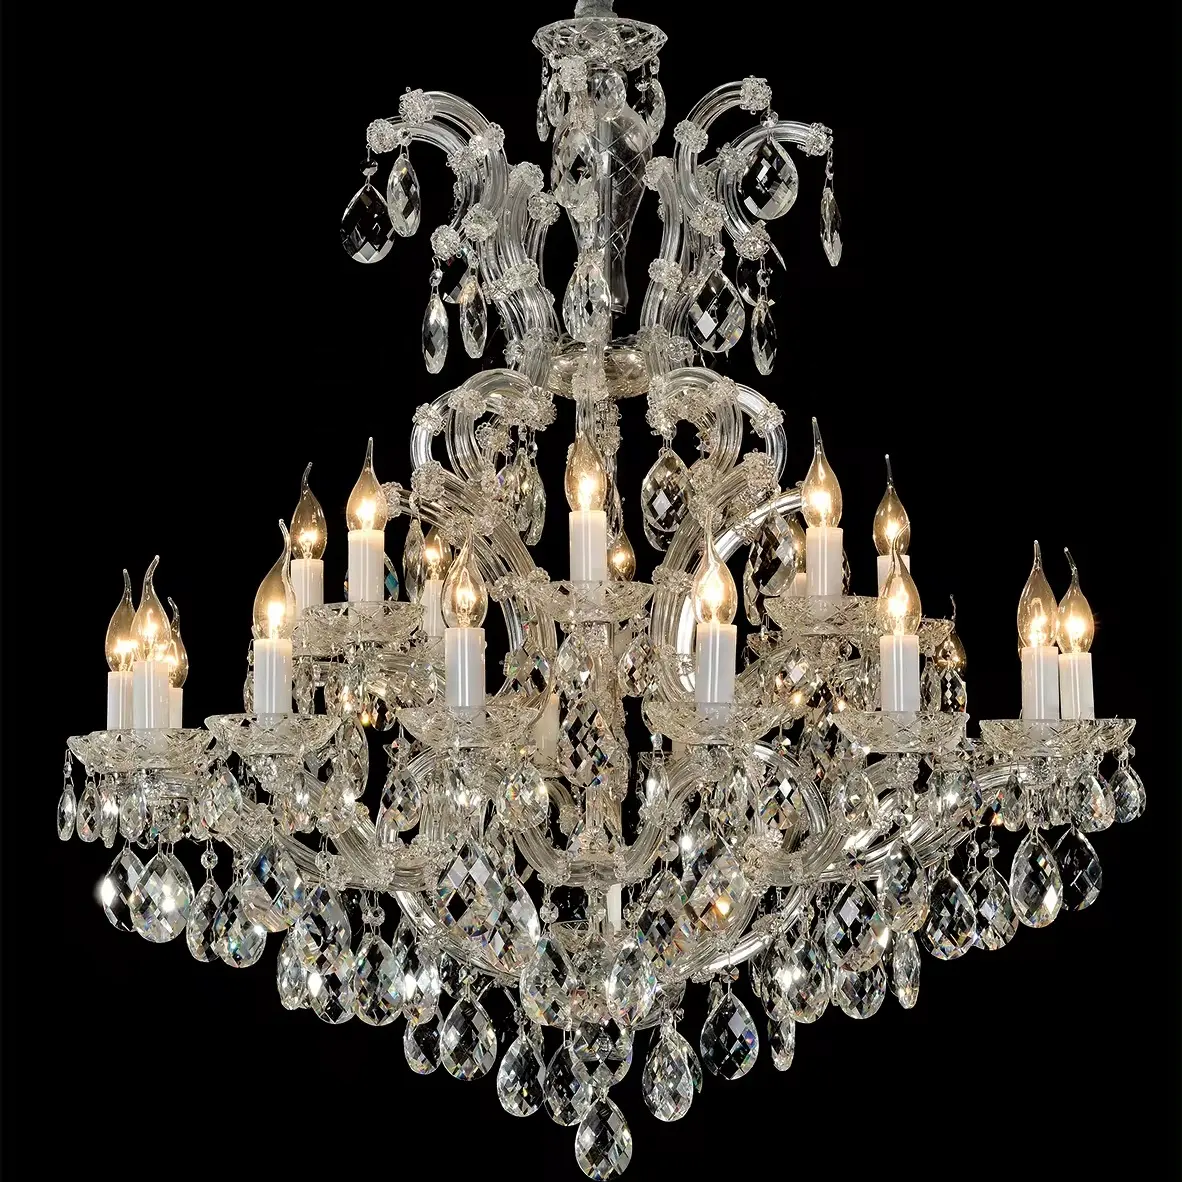 Hot sale European 25 lights silver customizable maria teresa crystal chandelier for villa hotel living room dining room